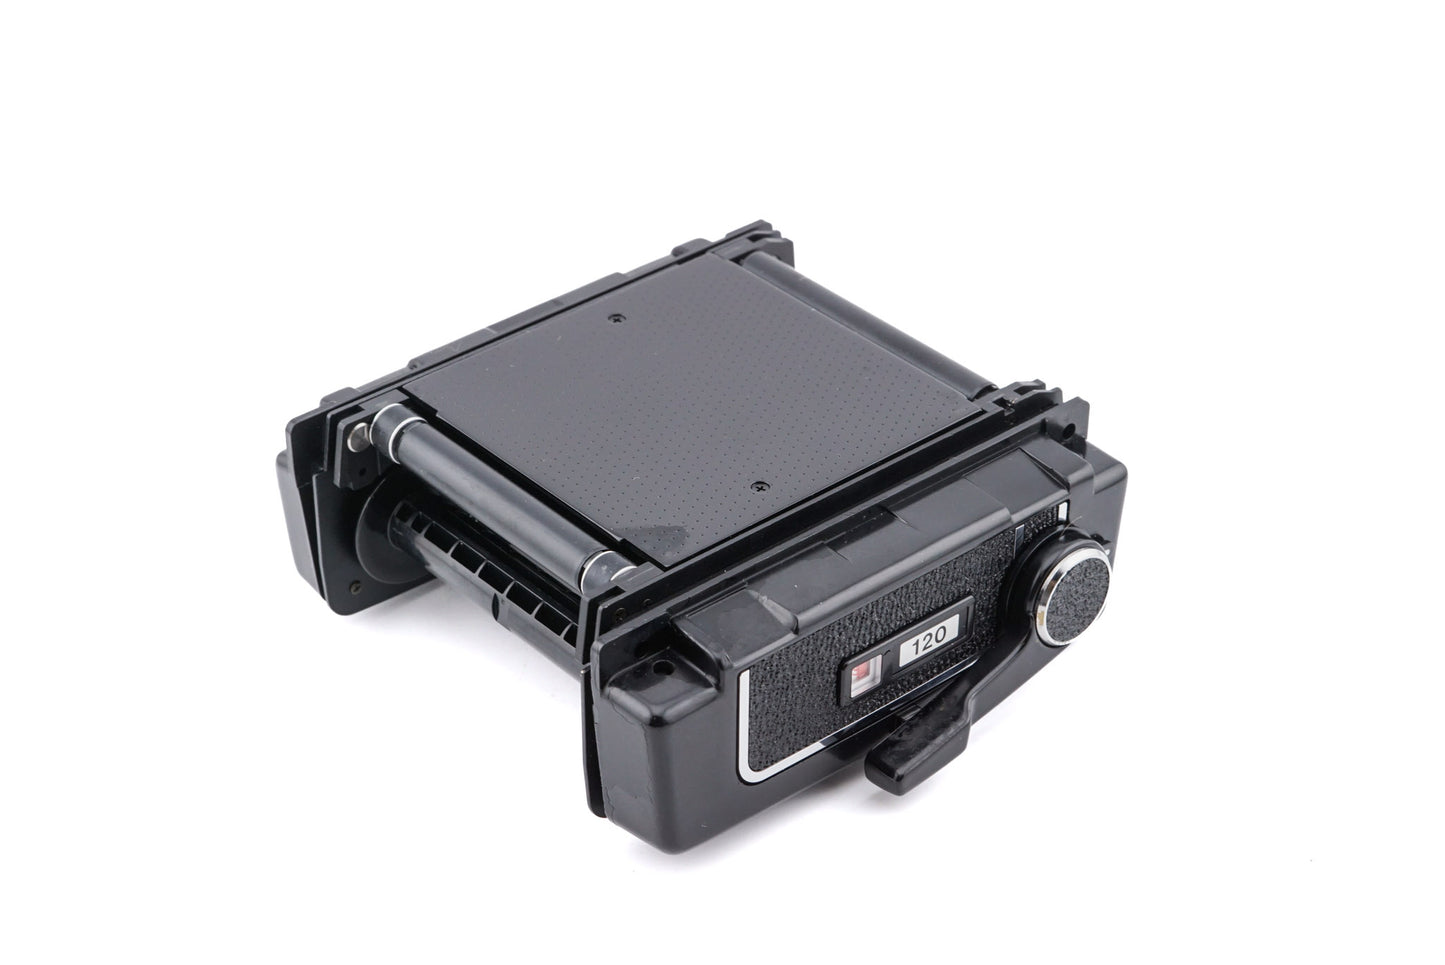 Mamiya RB67 Pro SD + 127mm f3.8 Sekor C + 120 Pro-SD 6x7 Film Back + Waist Level Finder